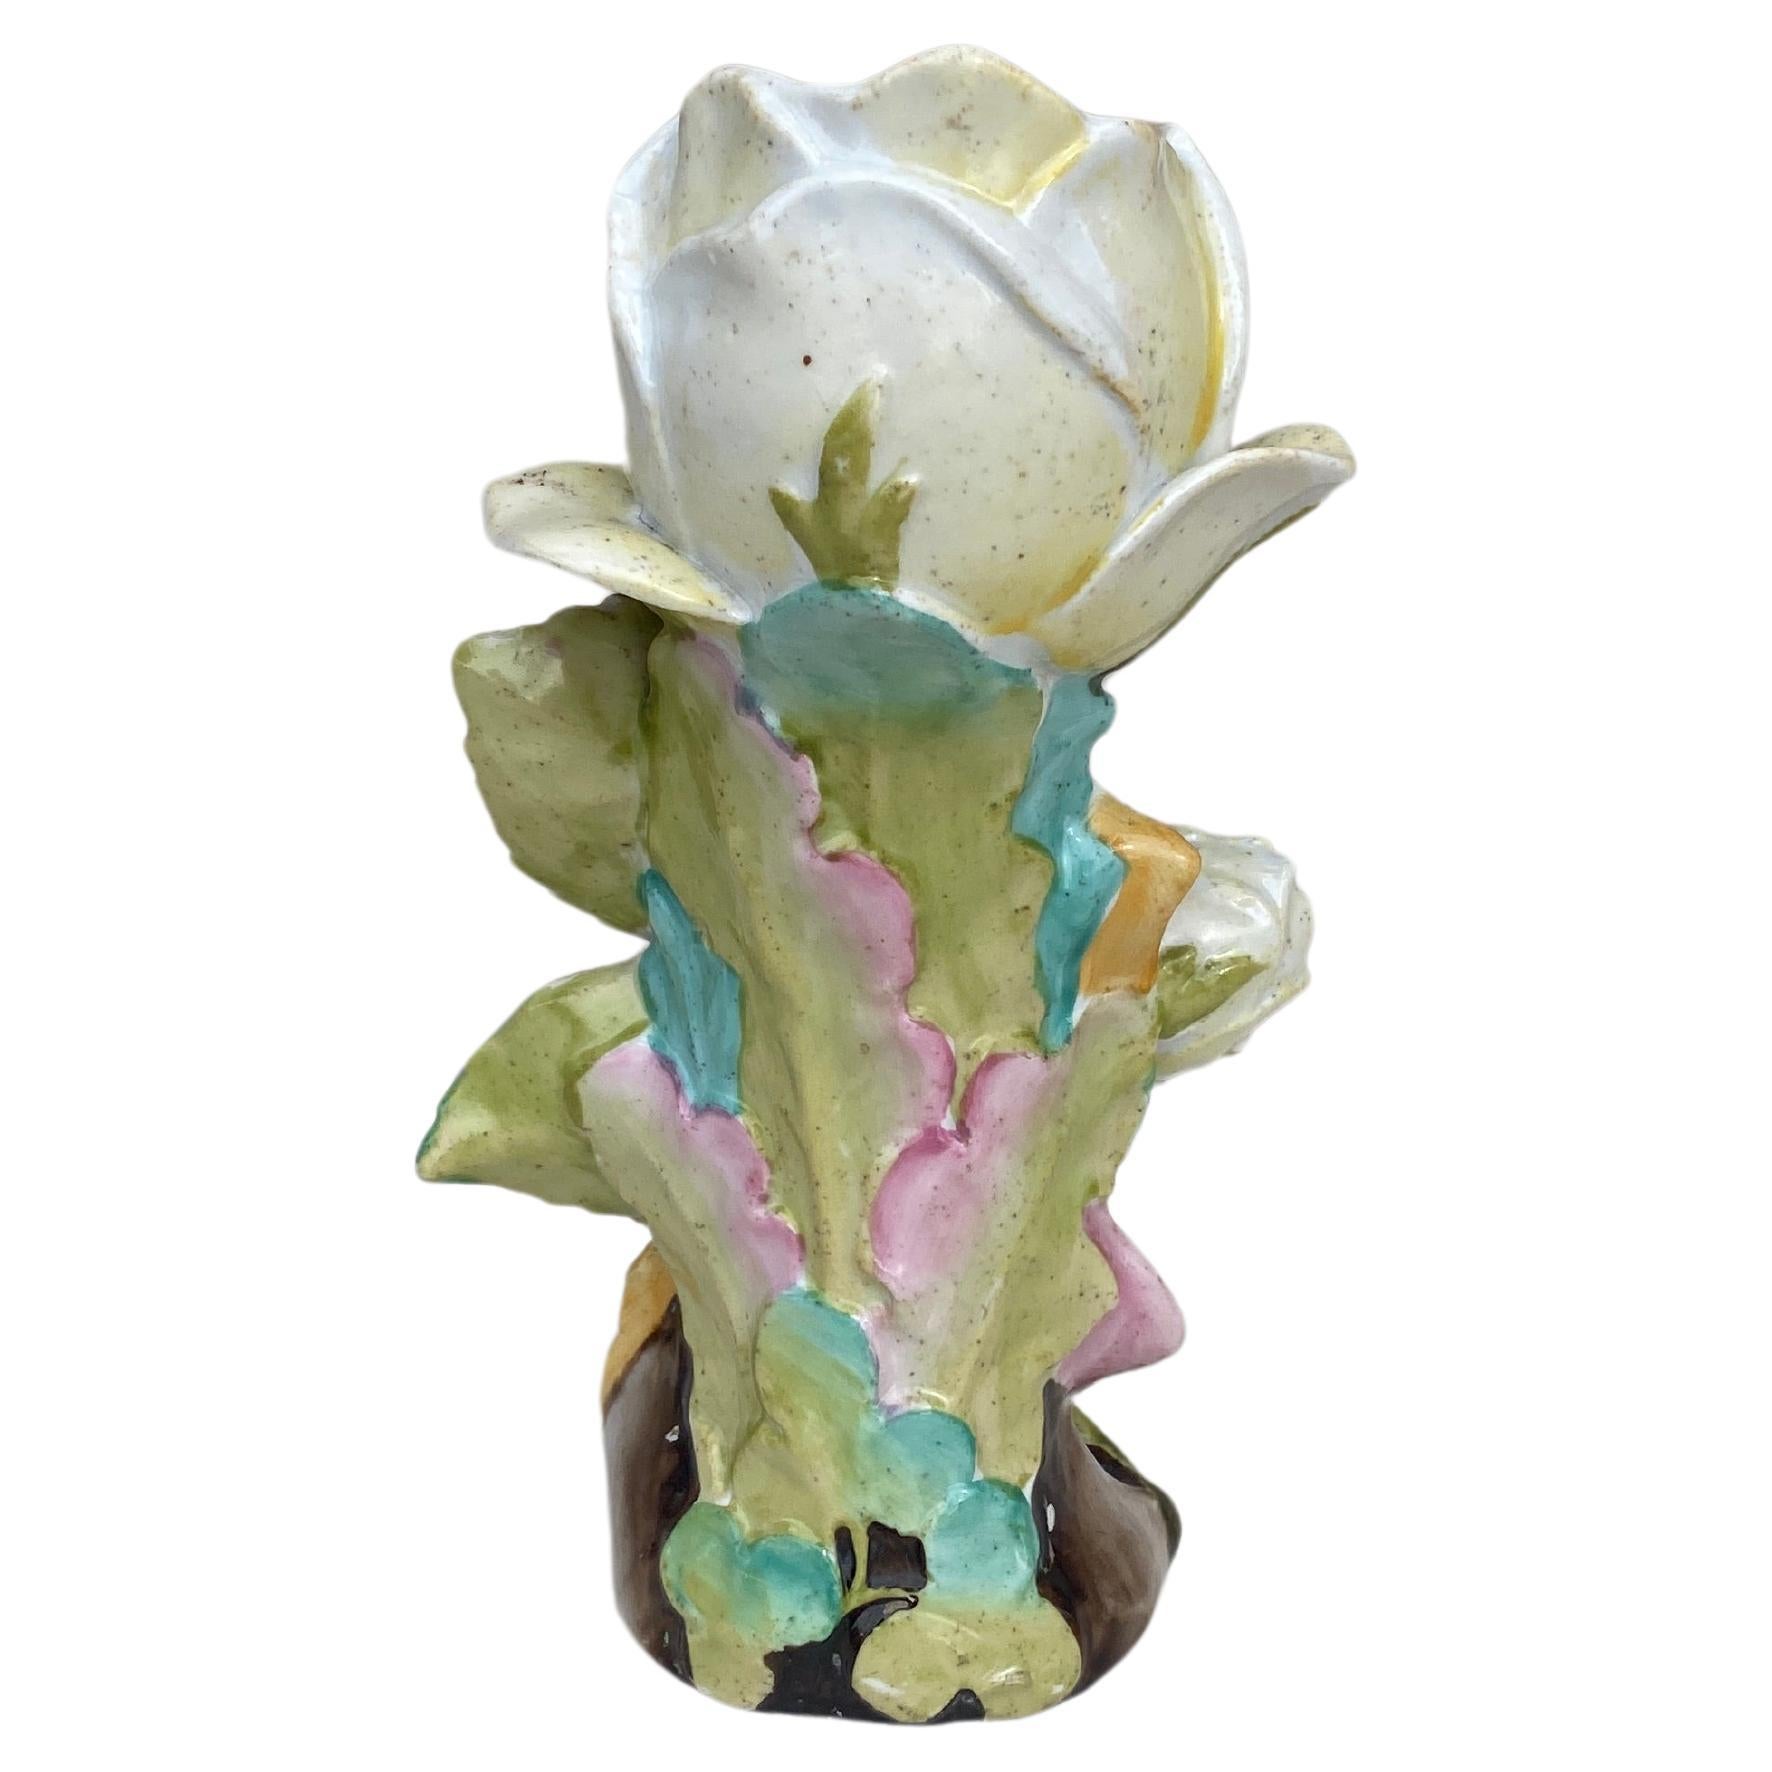 French Majolica White Rose Vase Circa 1900.
H / 6.5 inches.